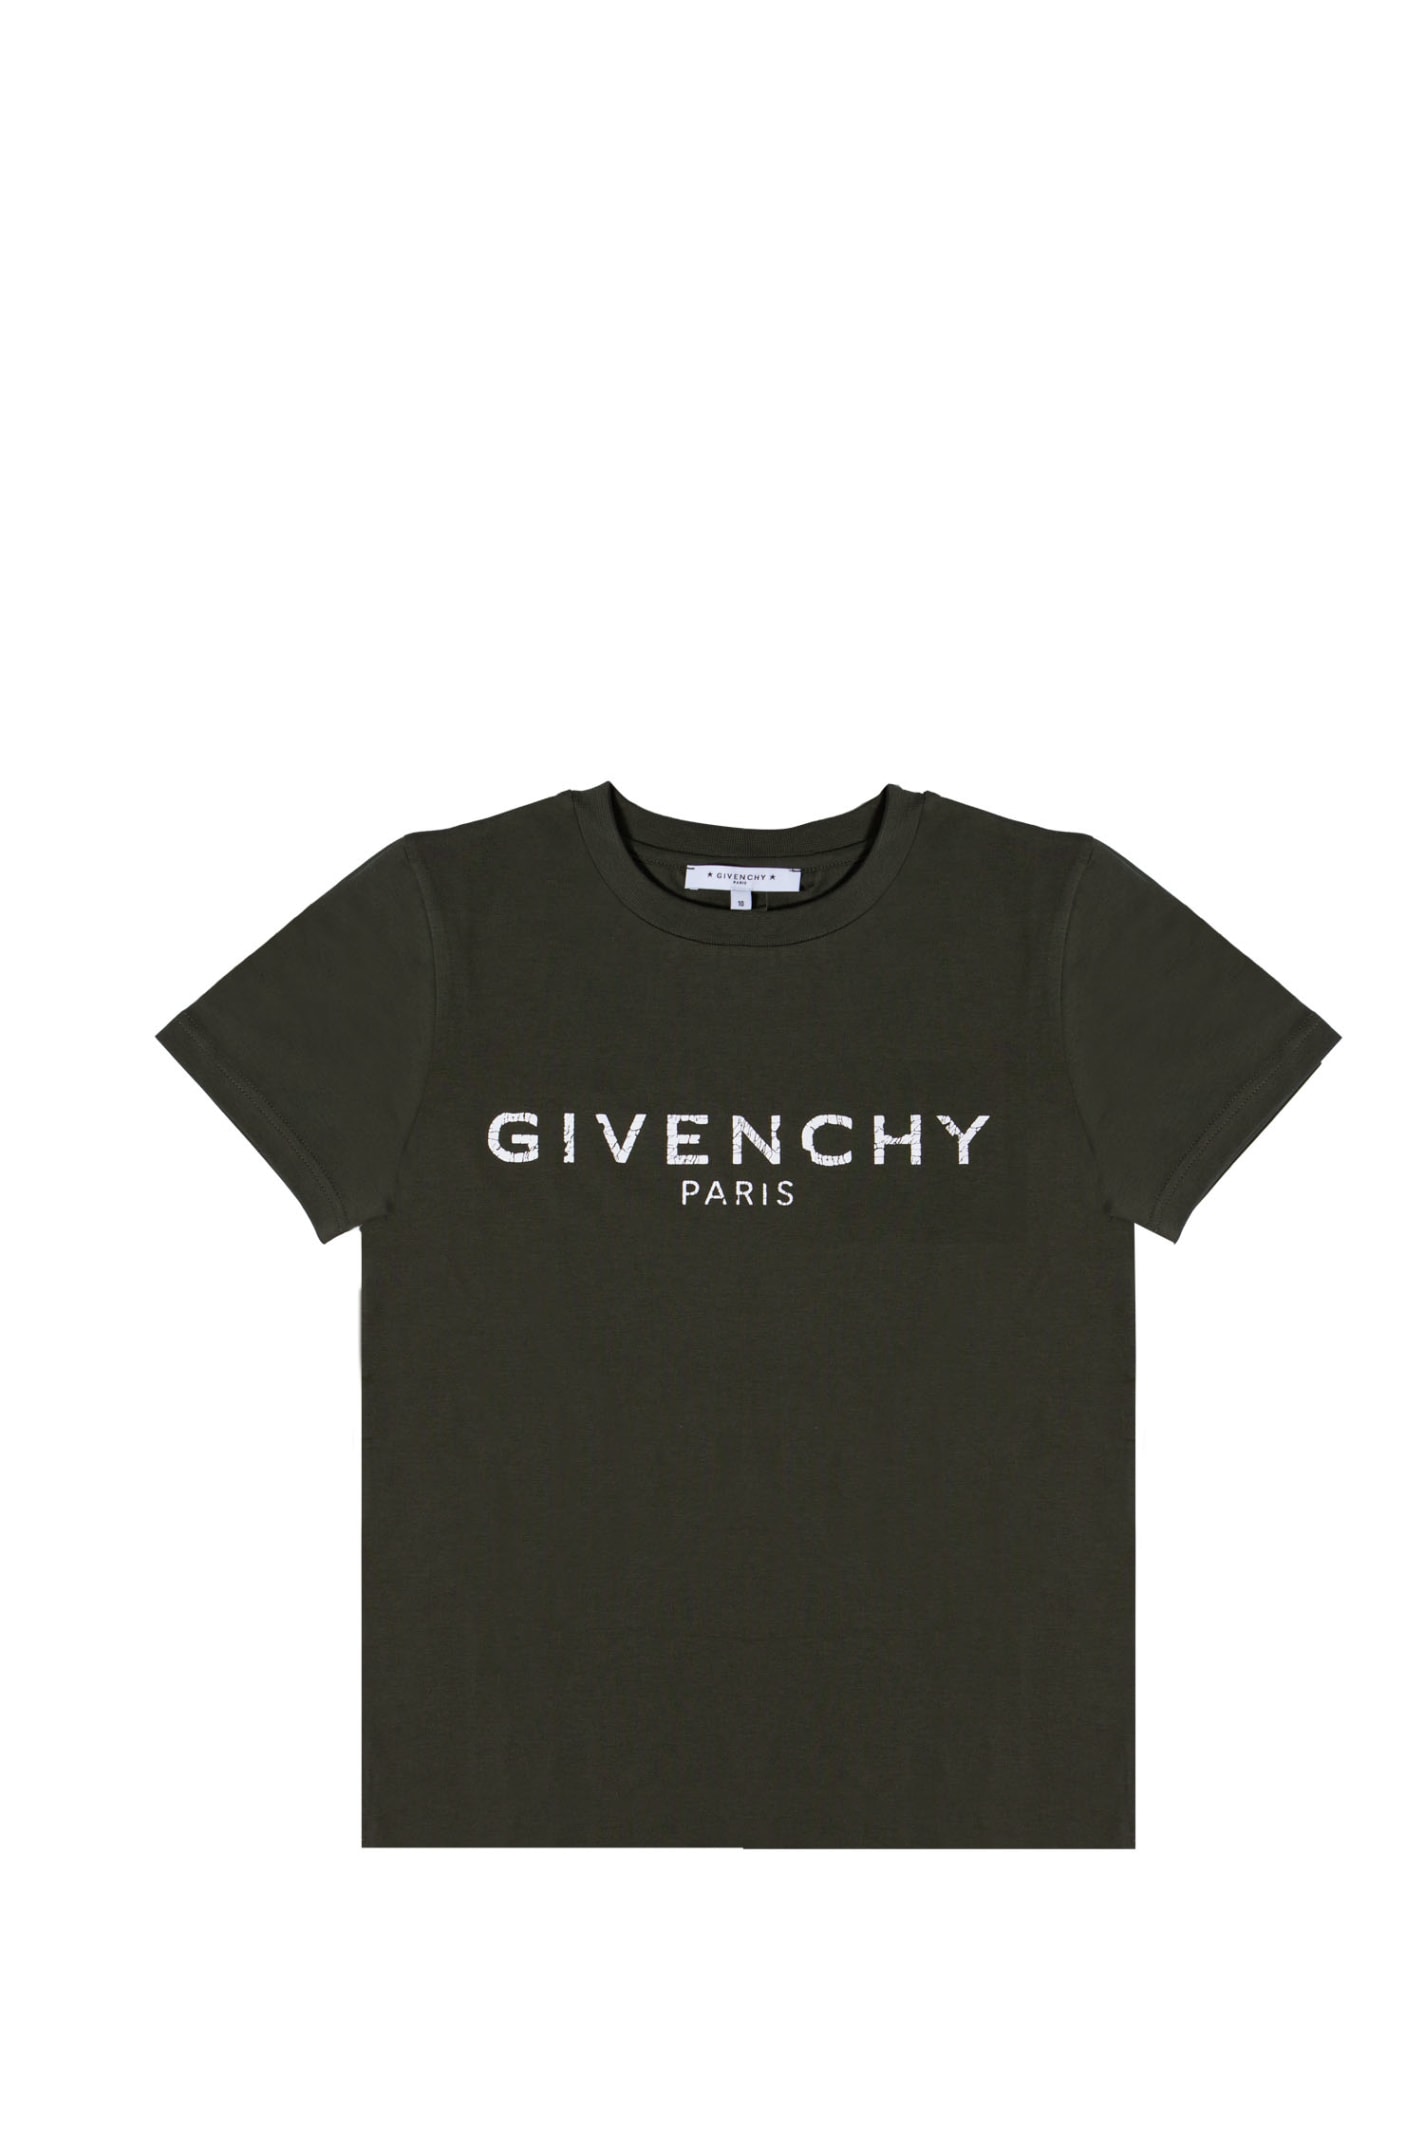 Givenchy Kids' T-shirt